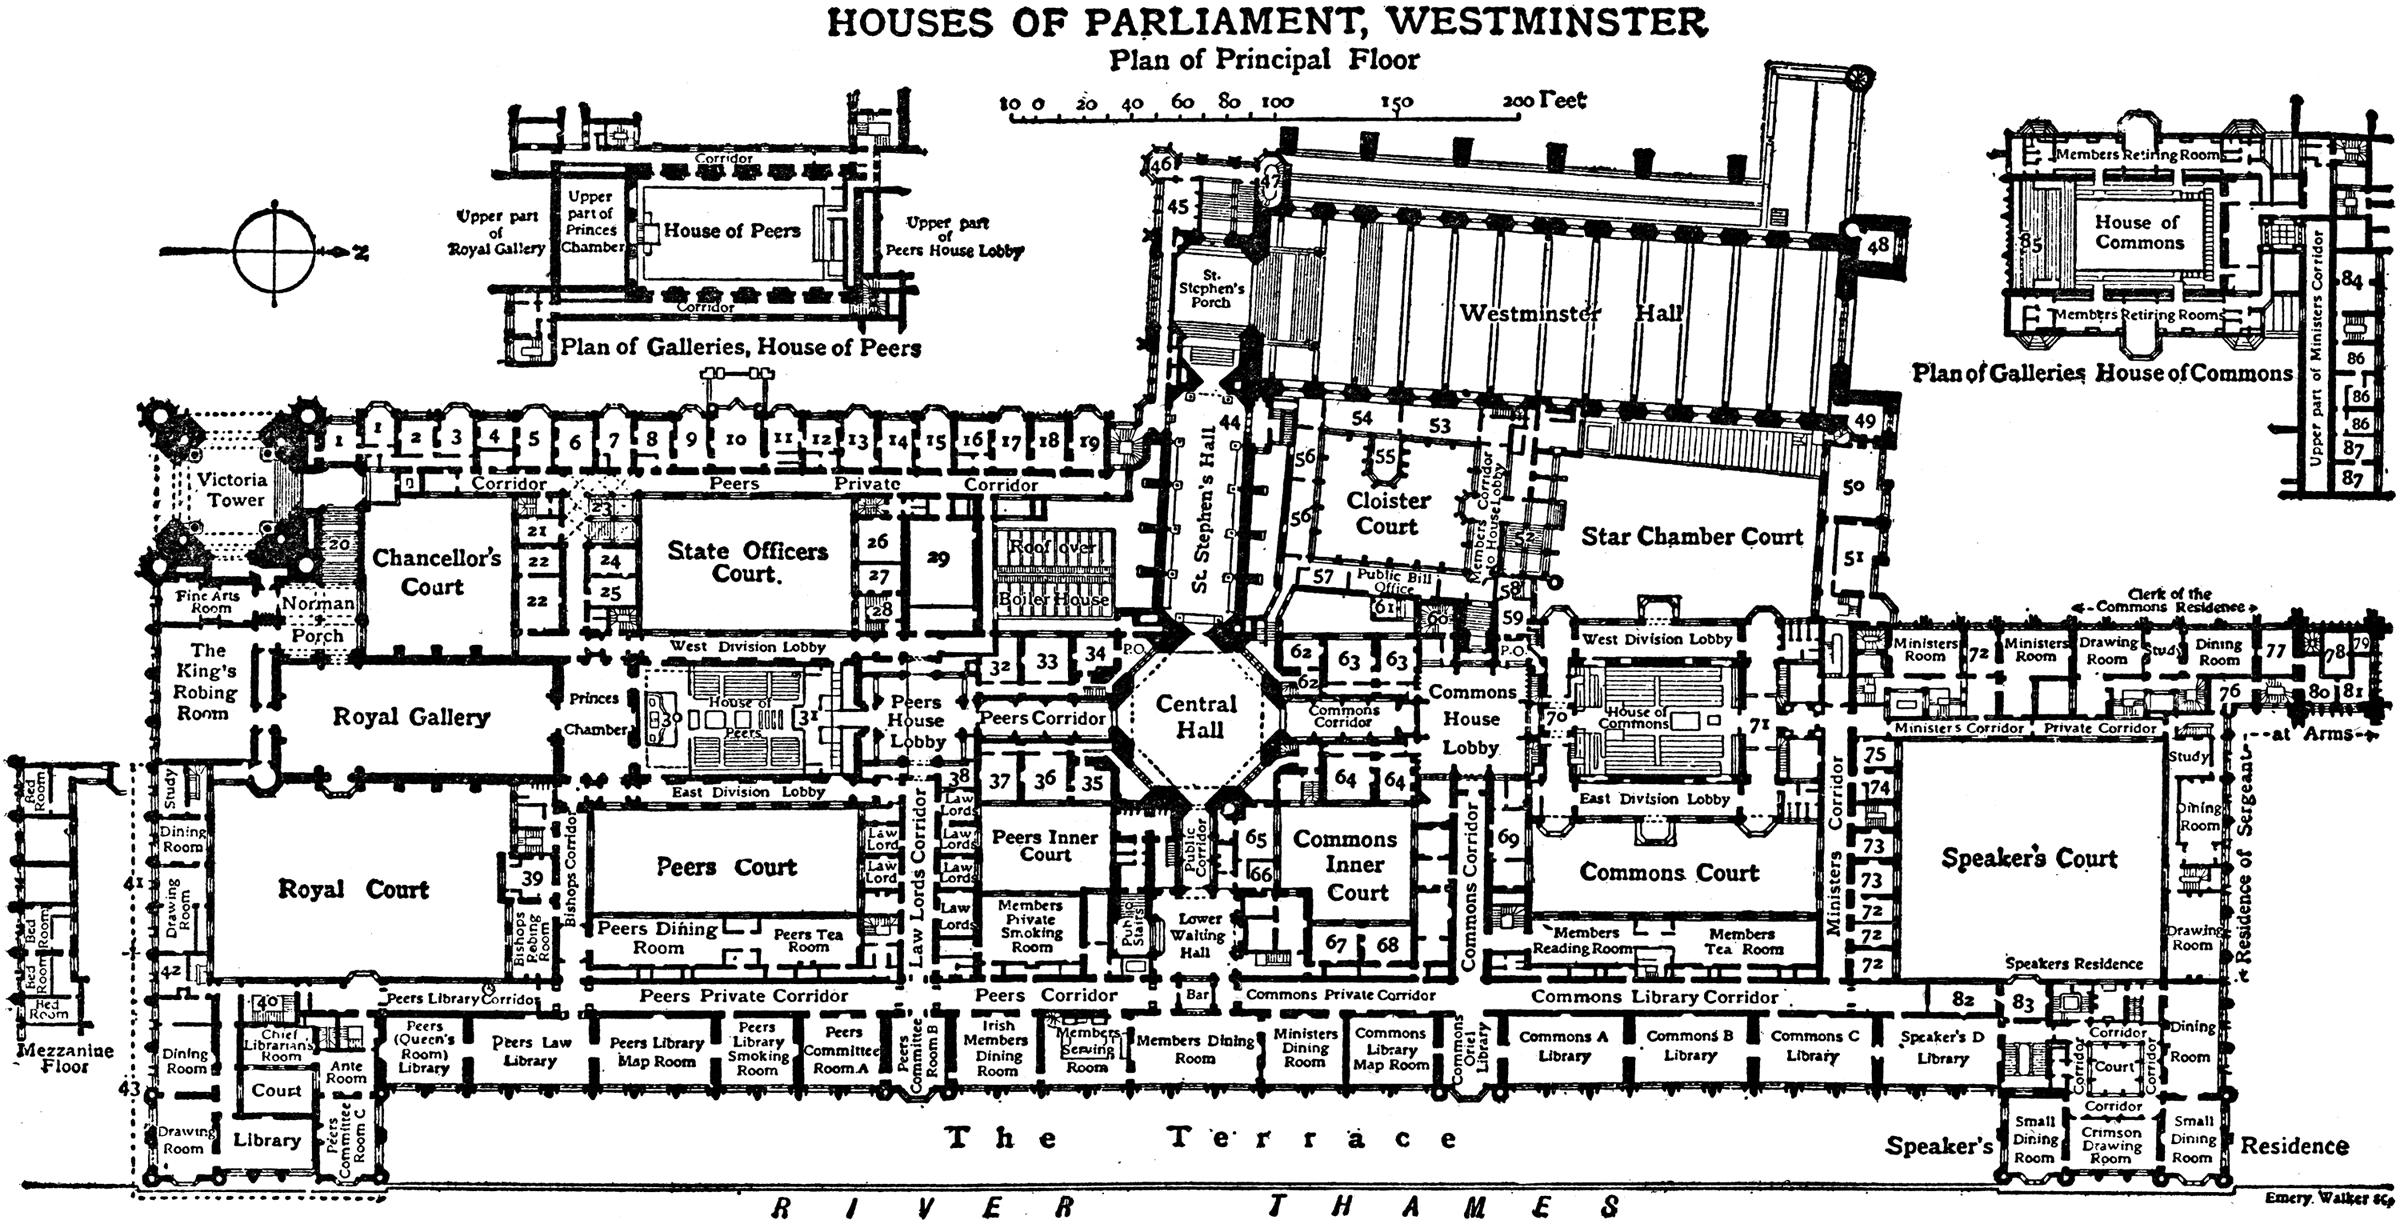 Houses of Parliament, Westminster; Plan of Principal Floor